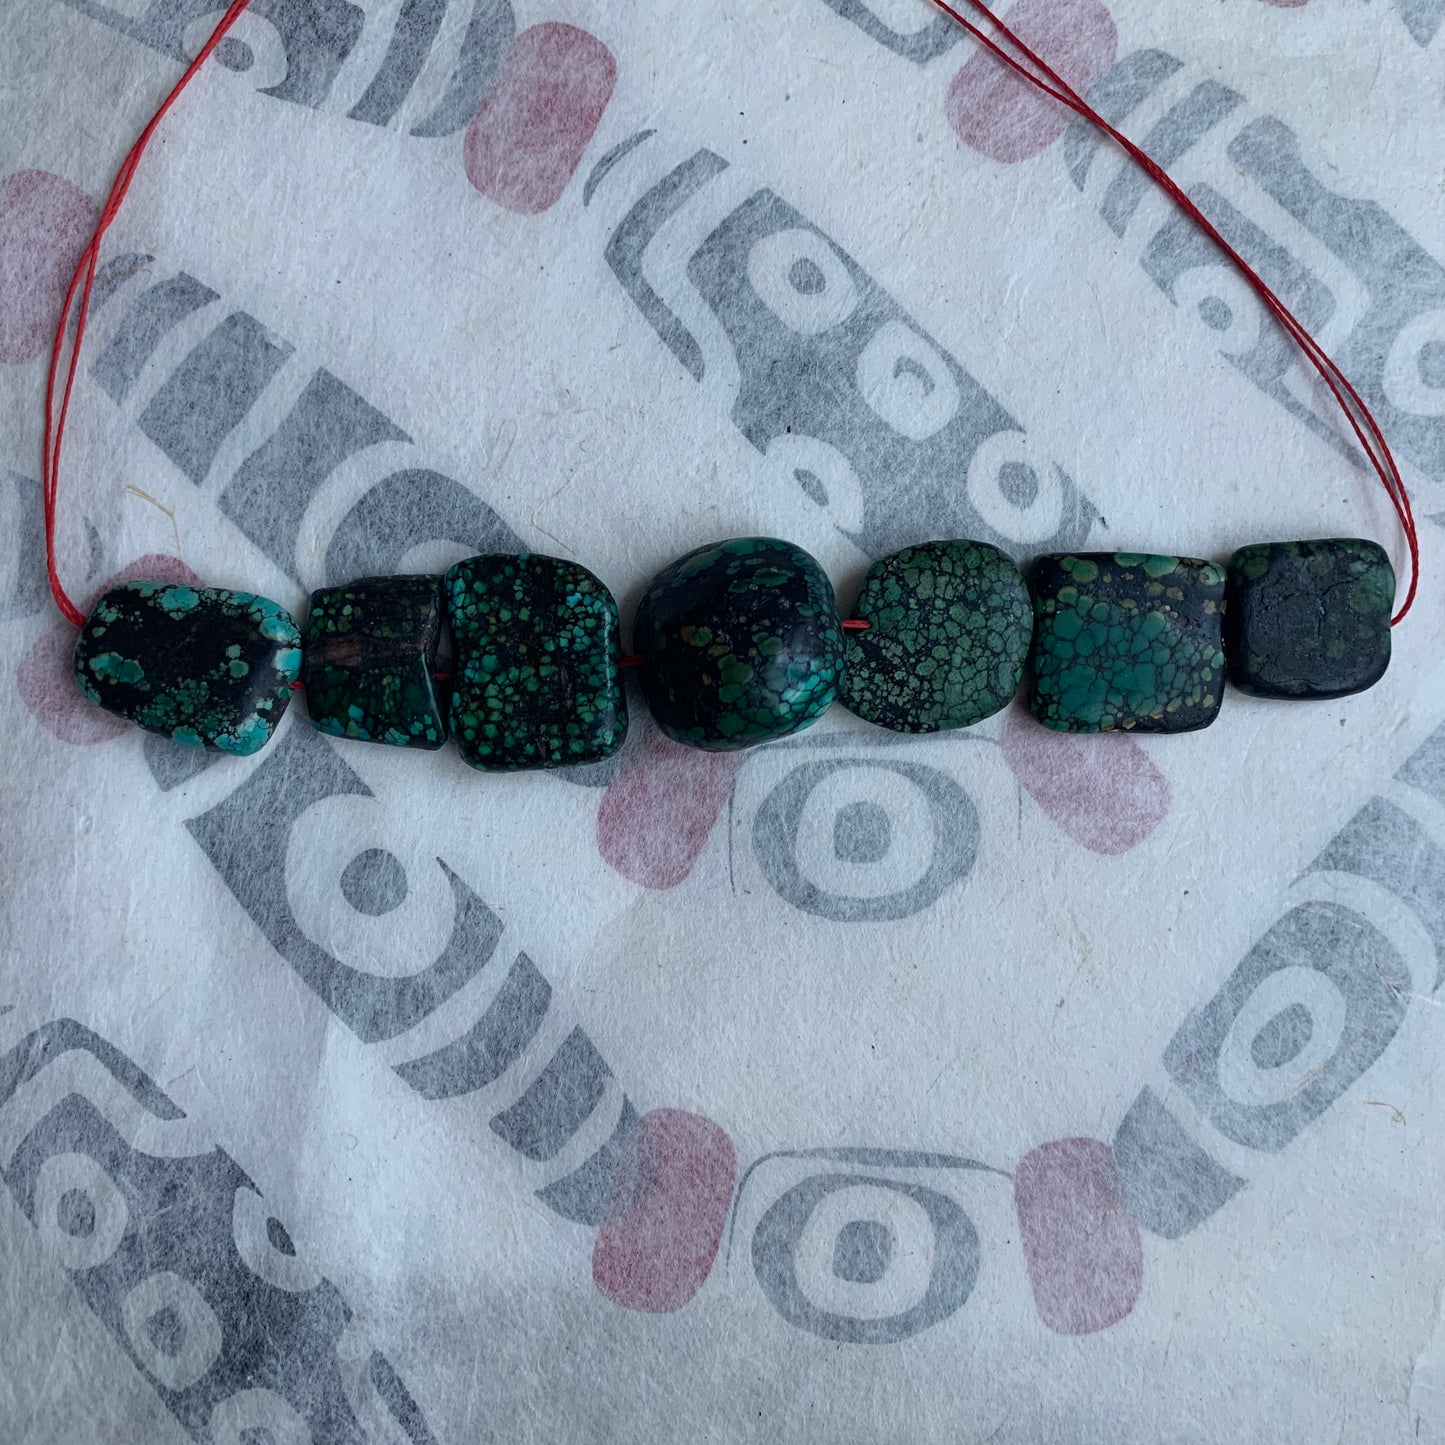 Antique Tibetan Turquoise beads necklace